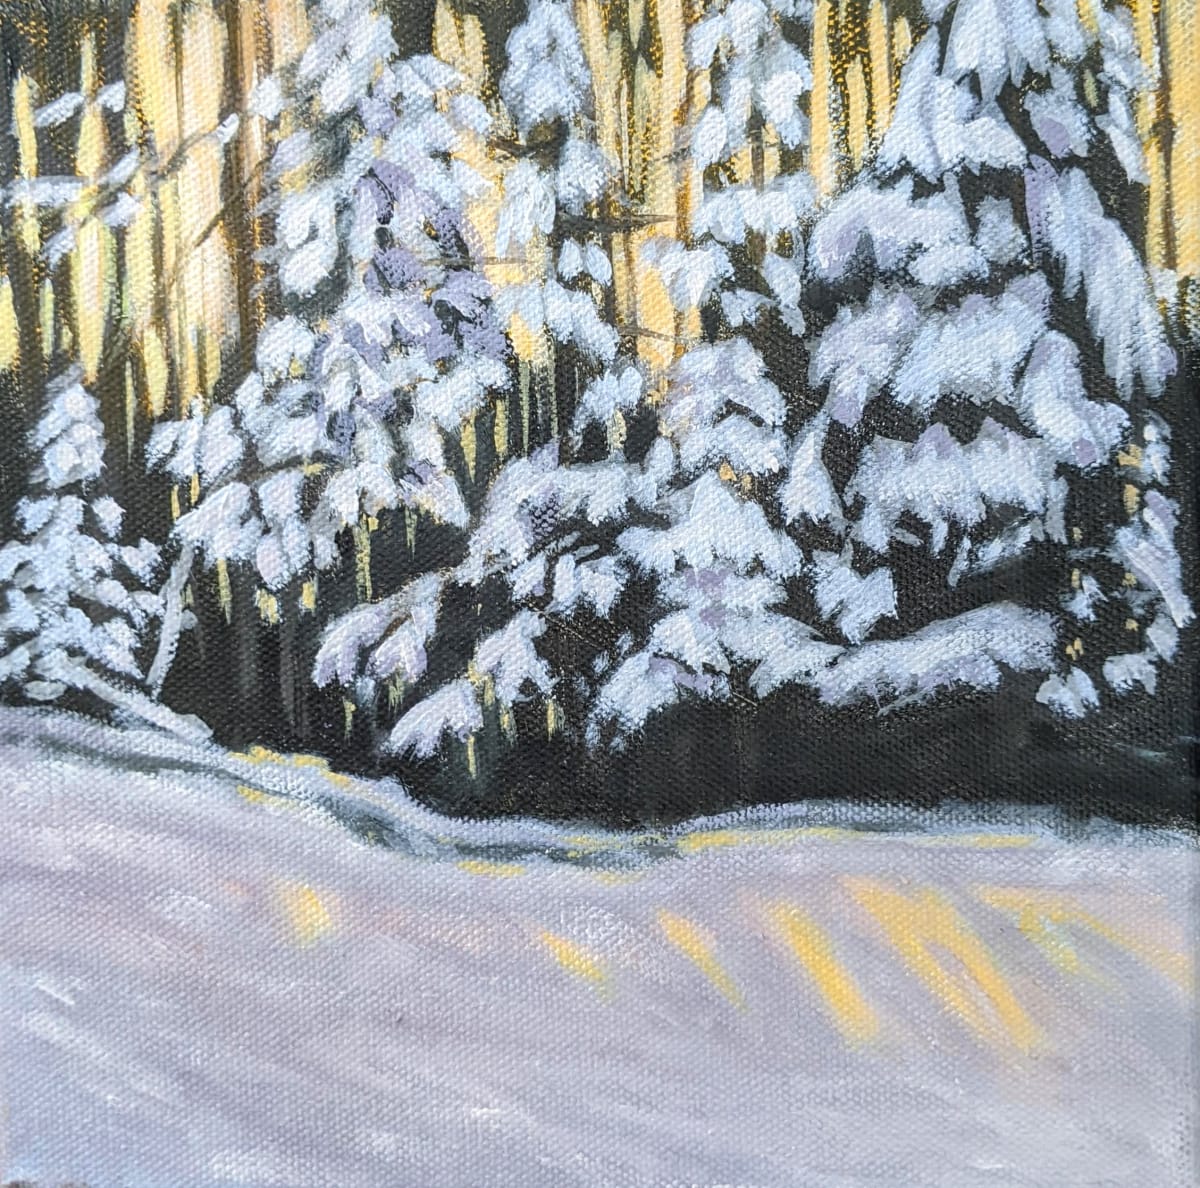 Yellow Sun on Snow 2 by Lisa McManus 